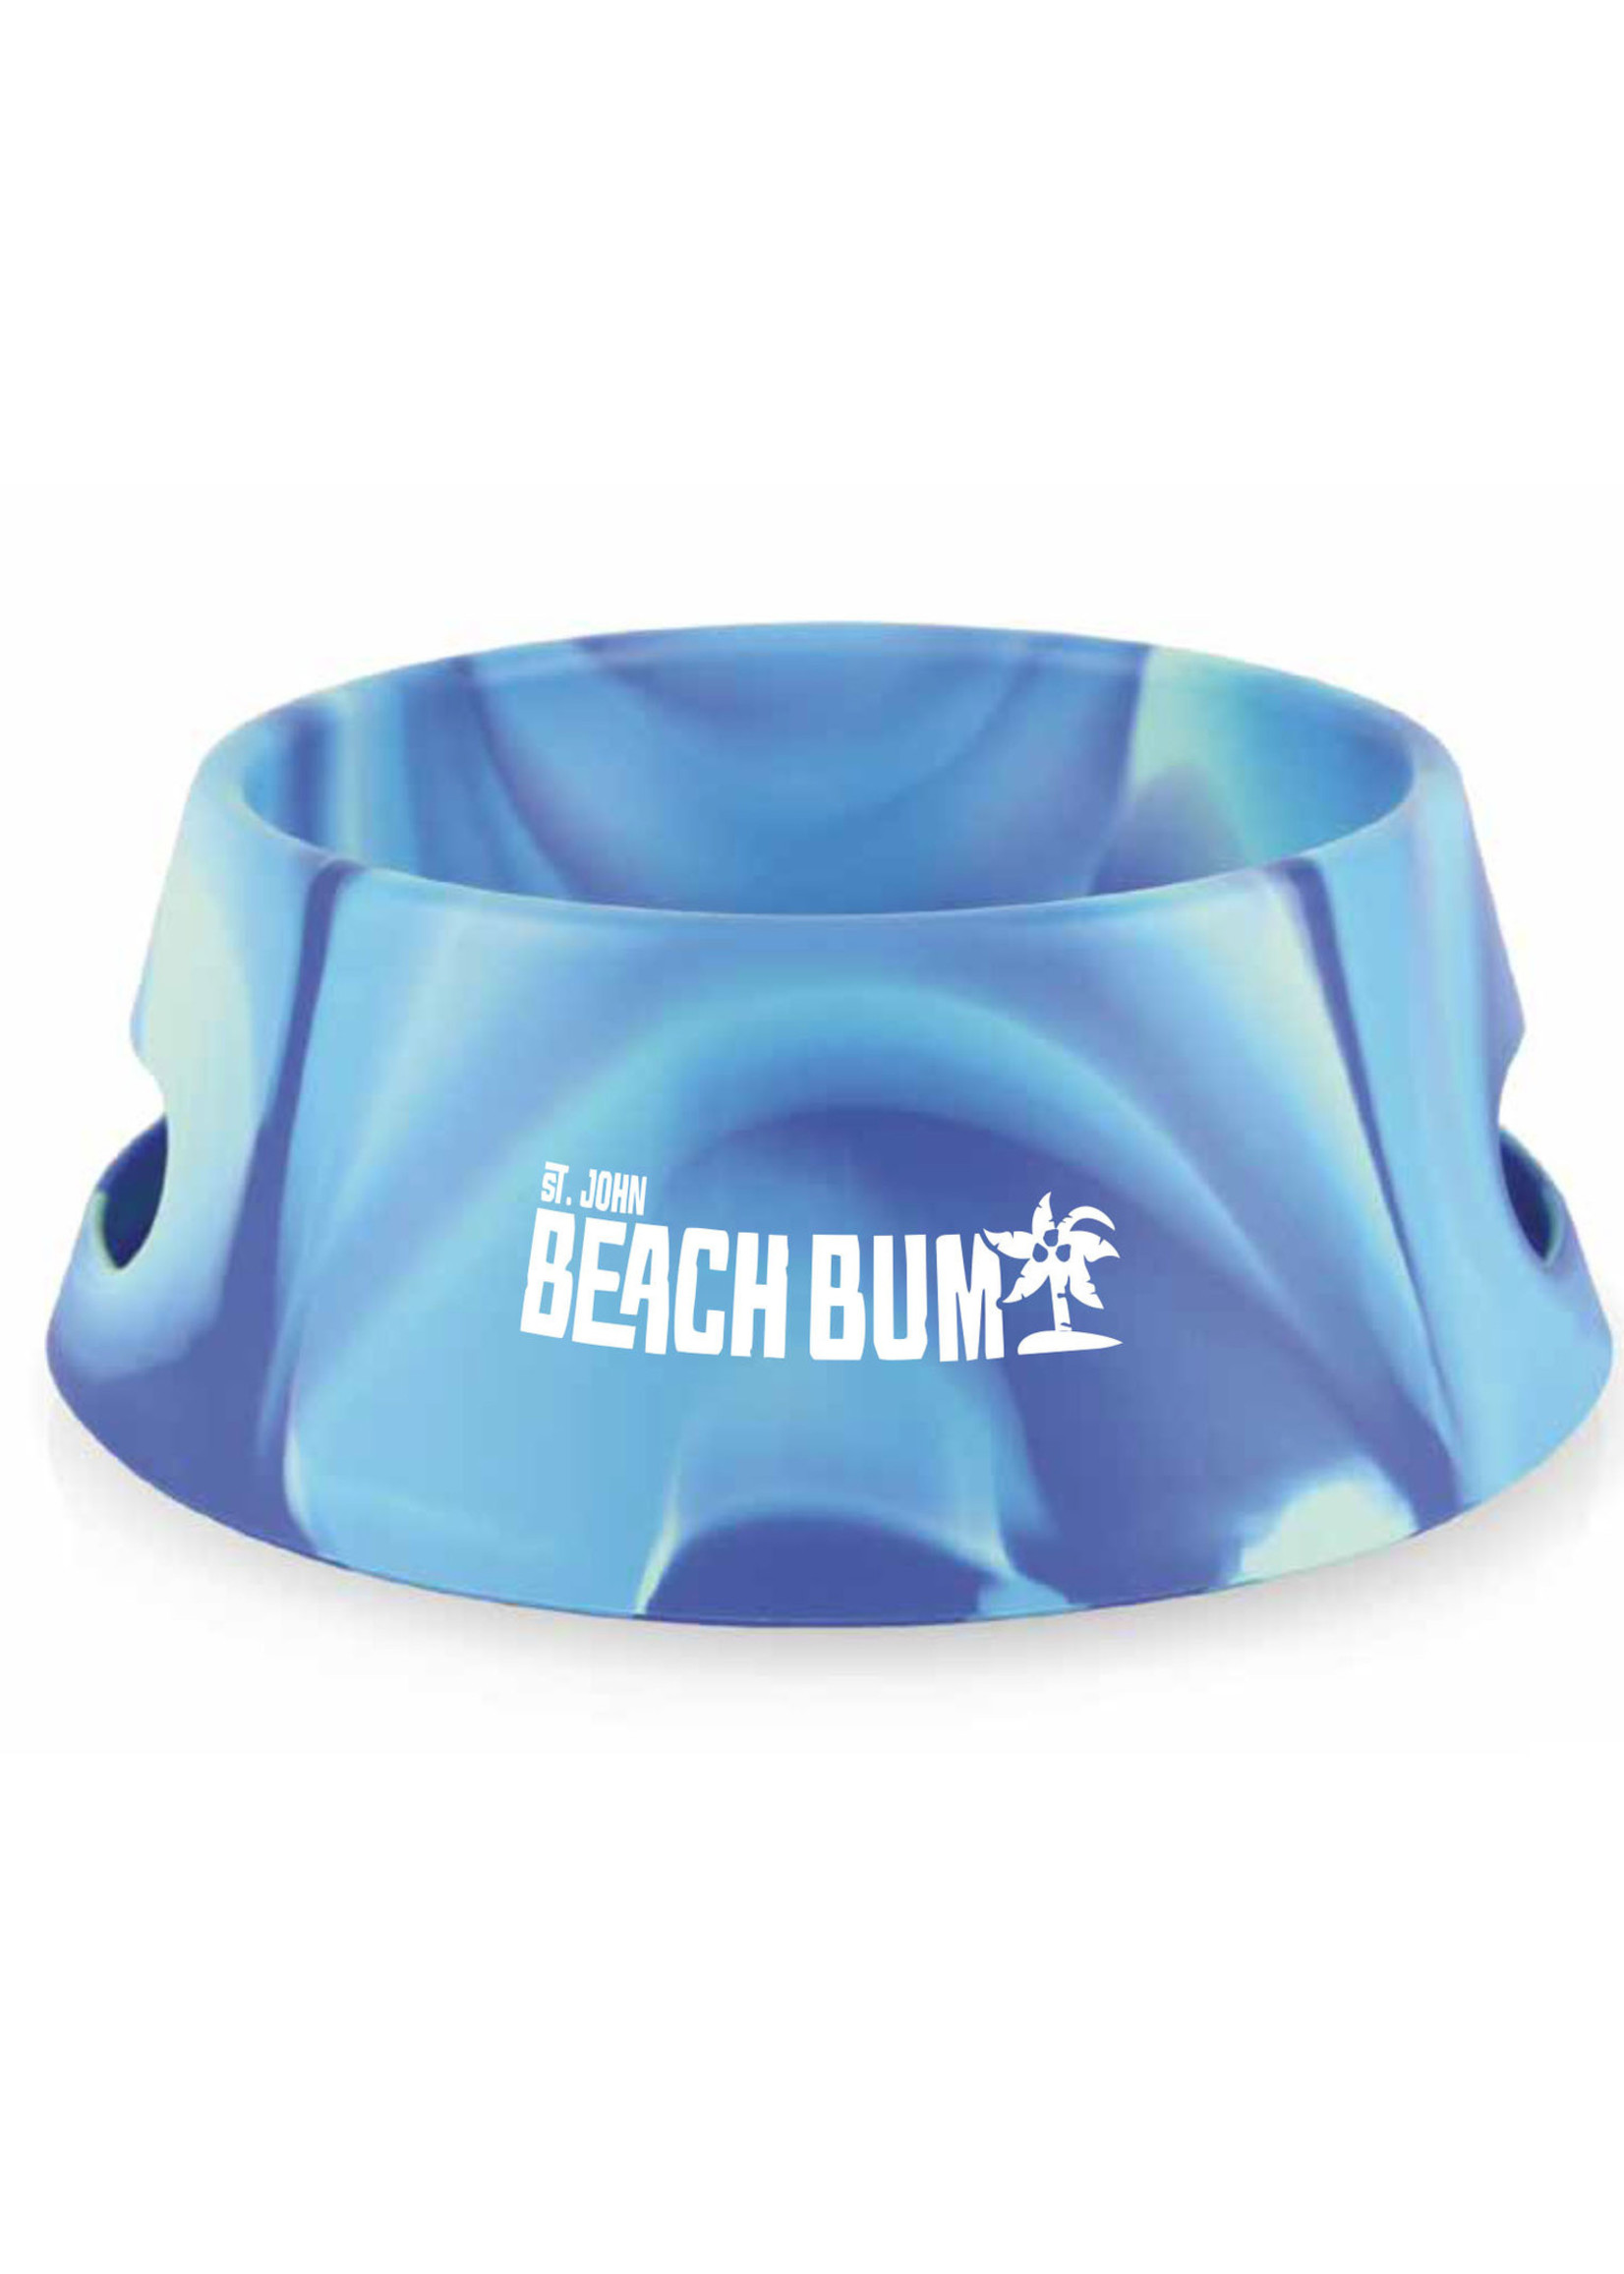 St. John Beach Bum Silicone Dog Bowl - Stretch Logo